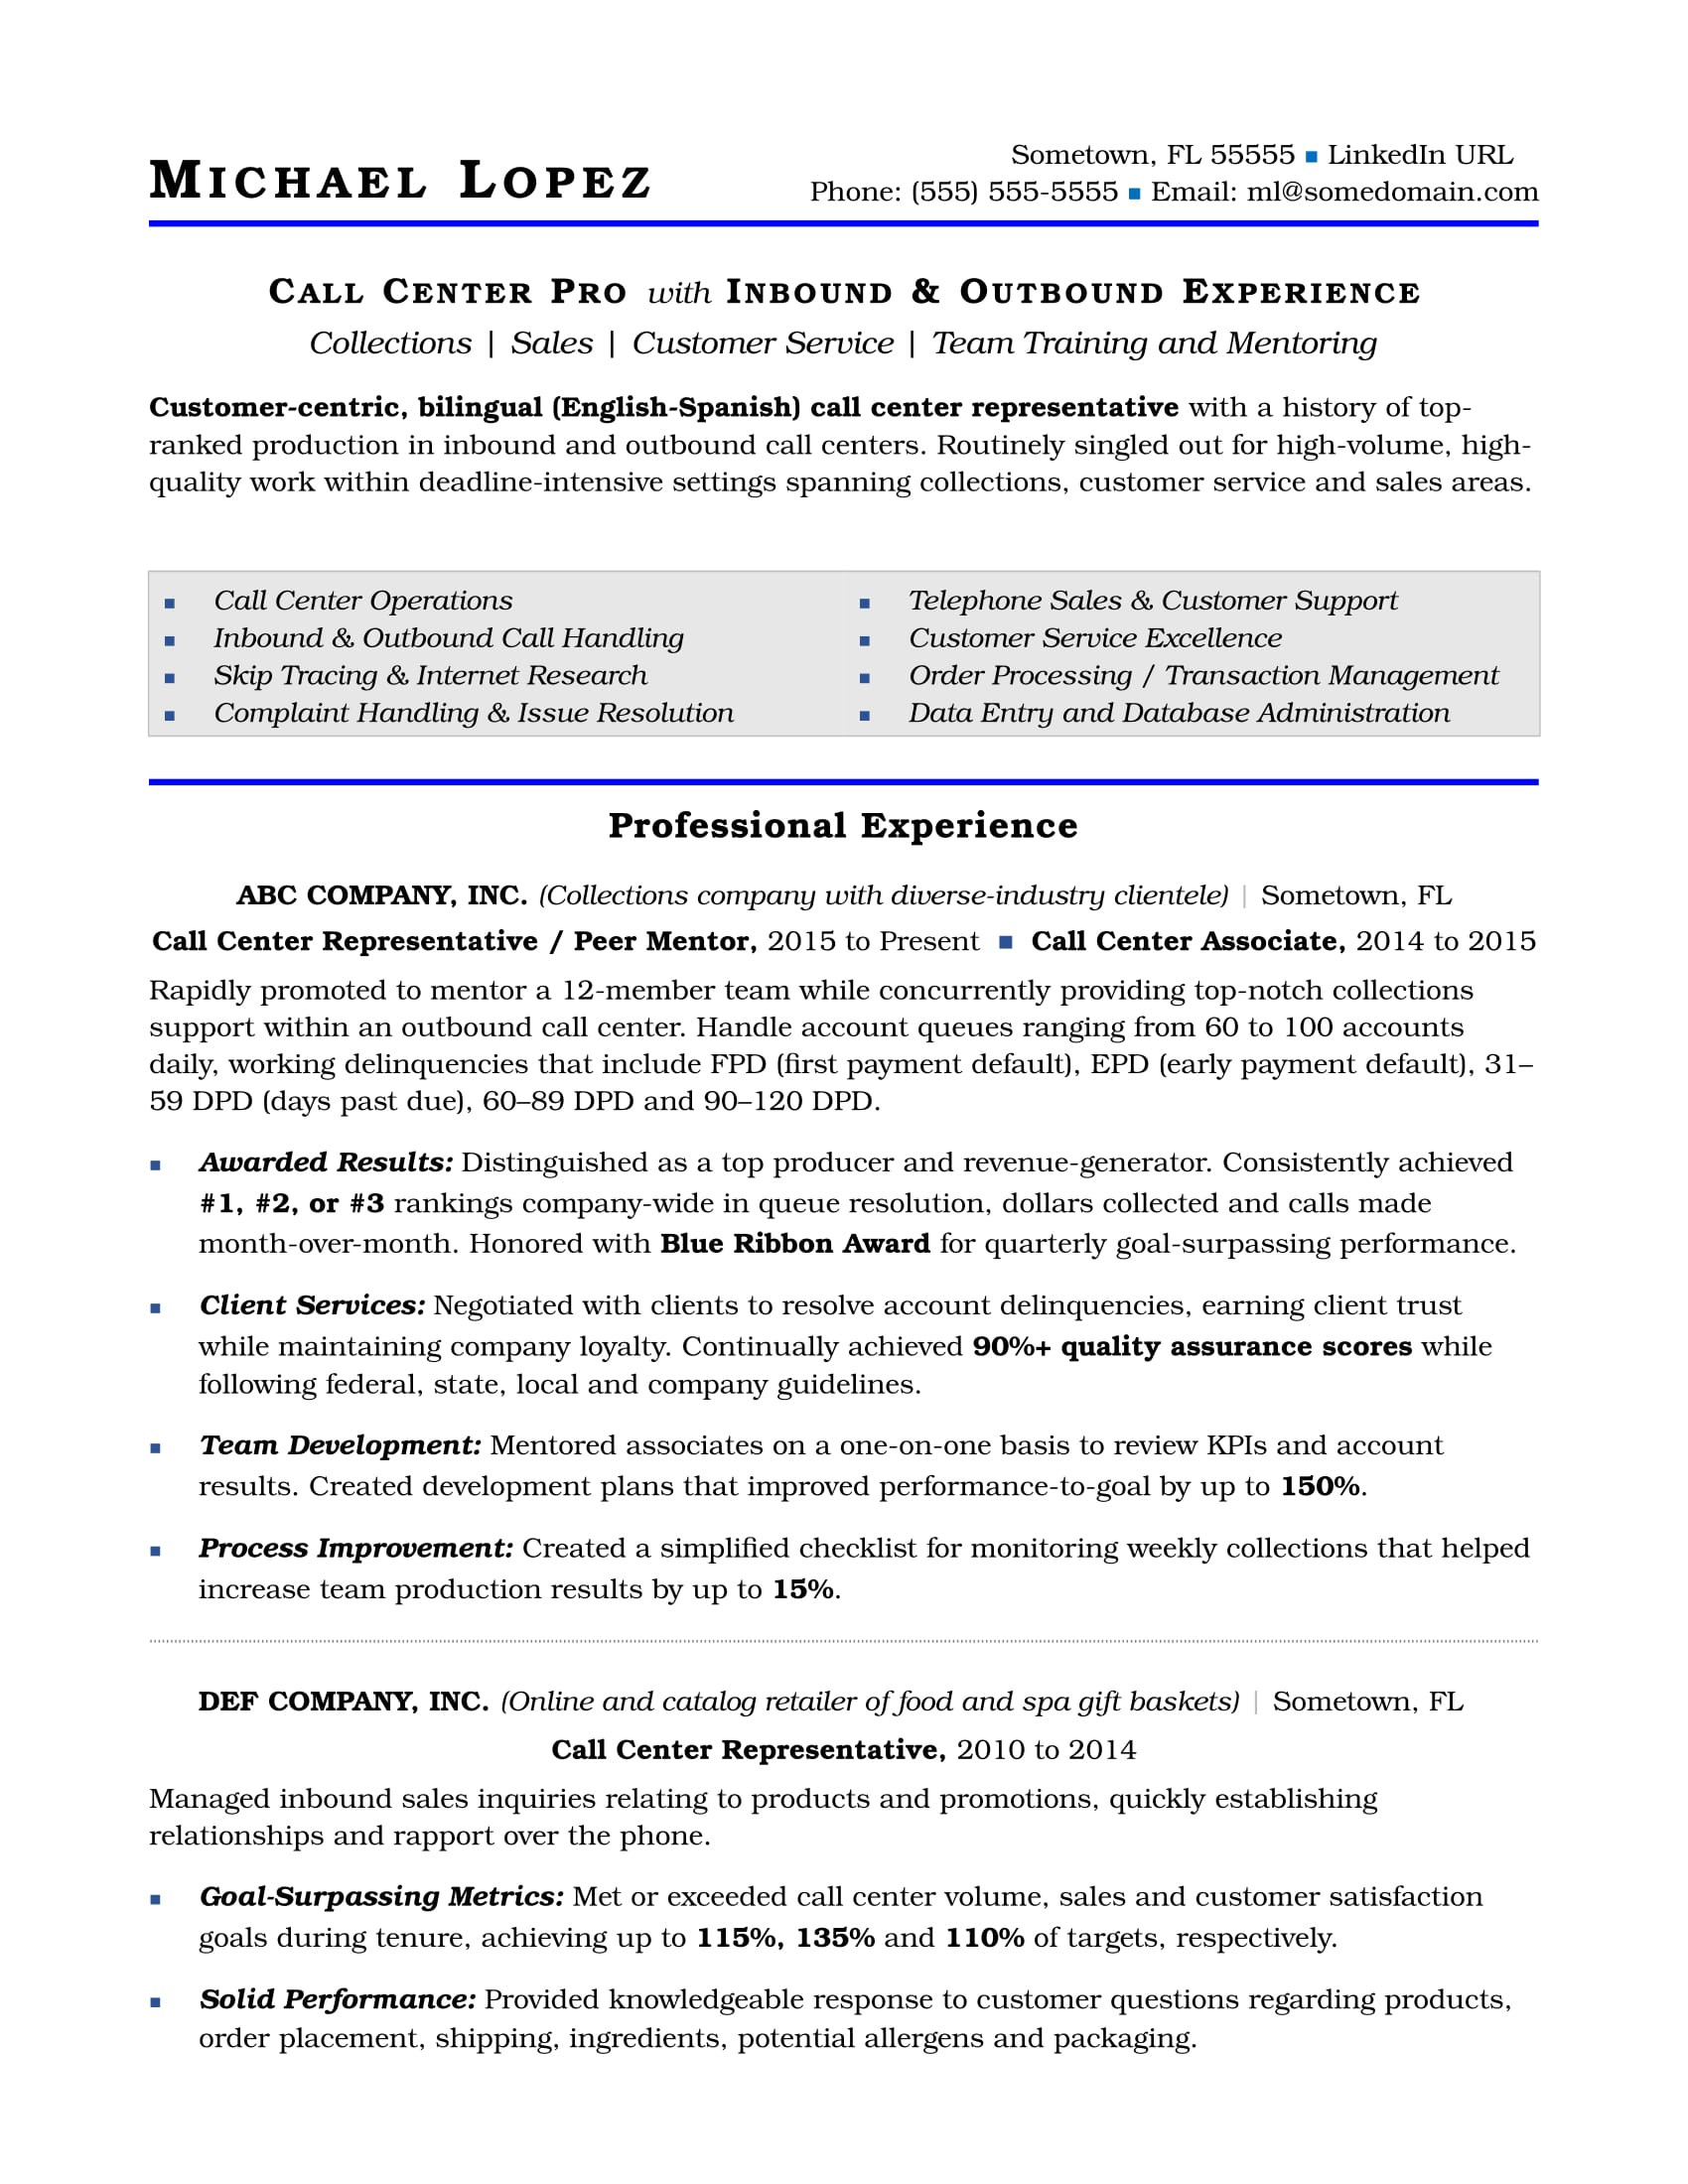 Call Center Resume Template Free Download Call Center Resume Sample Monster.com